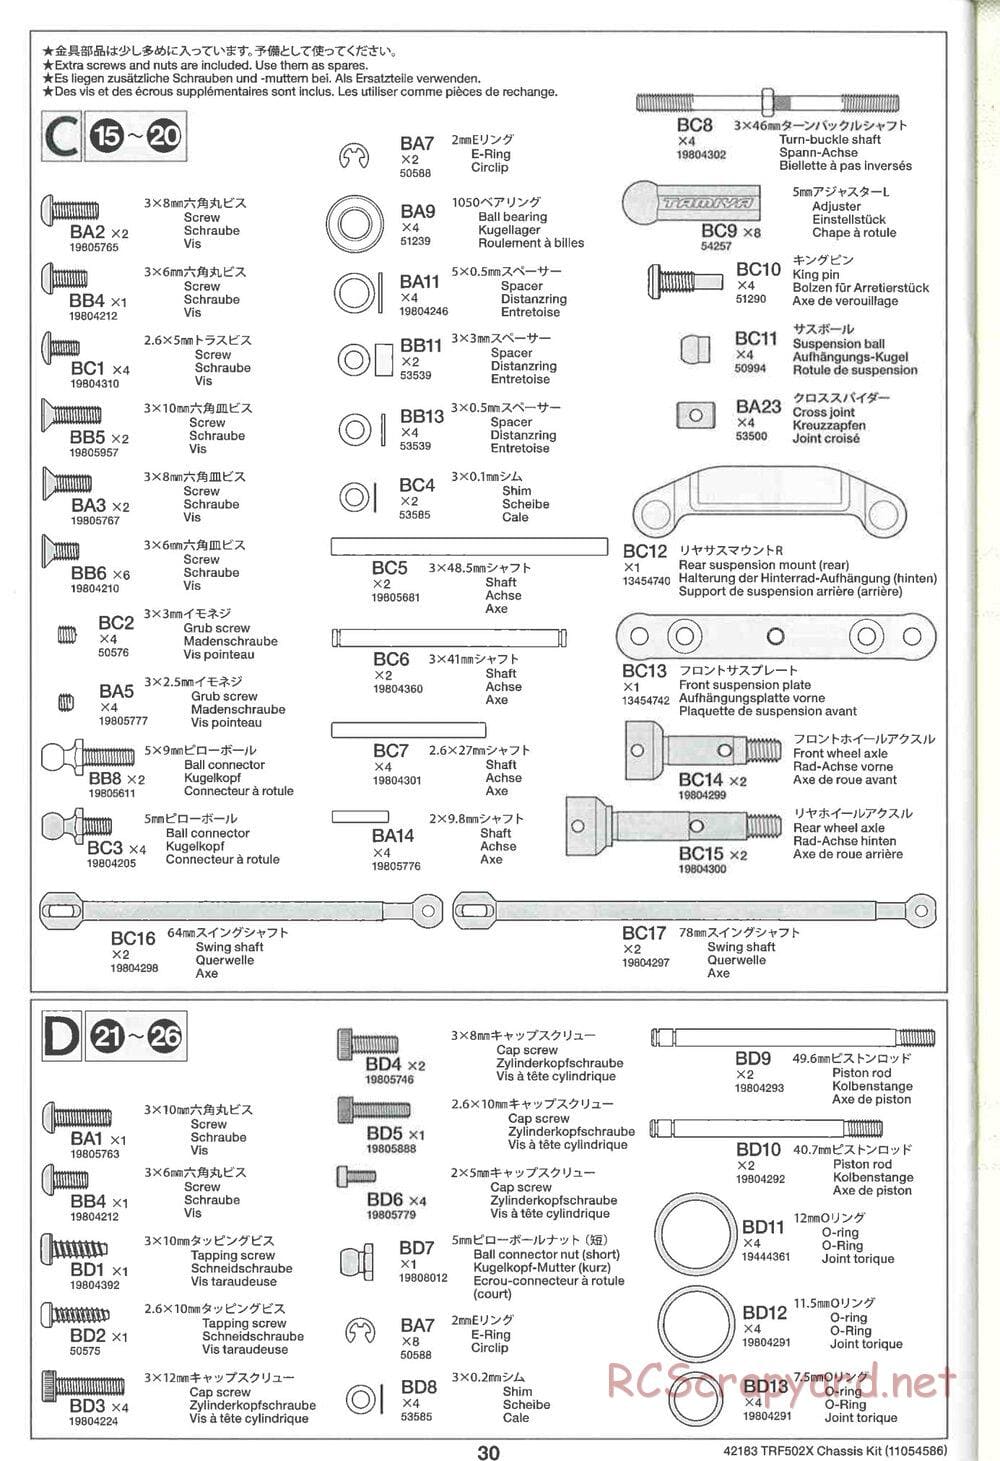 Tamiya - TRF502X Chassis - Manual - Page 30